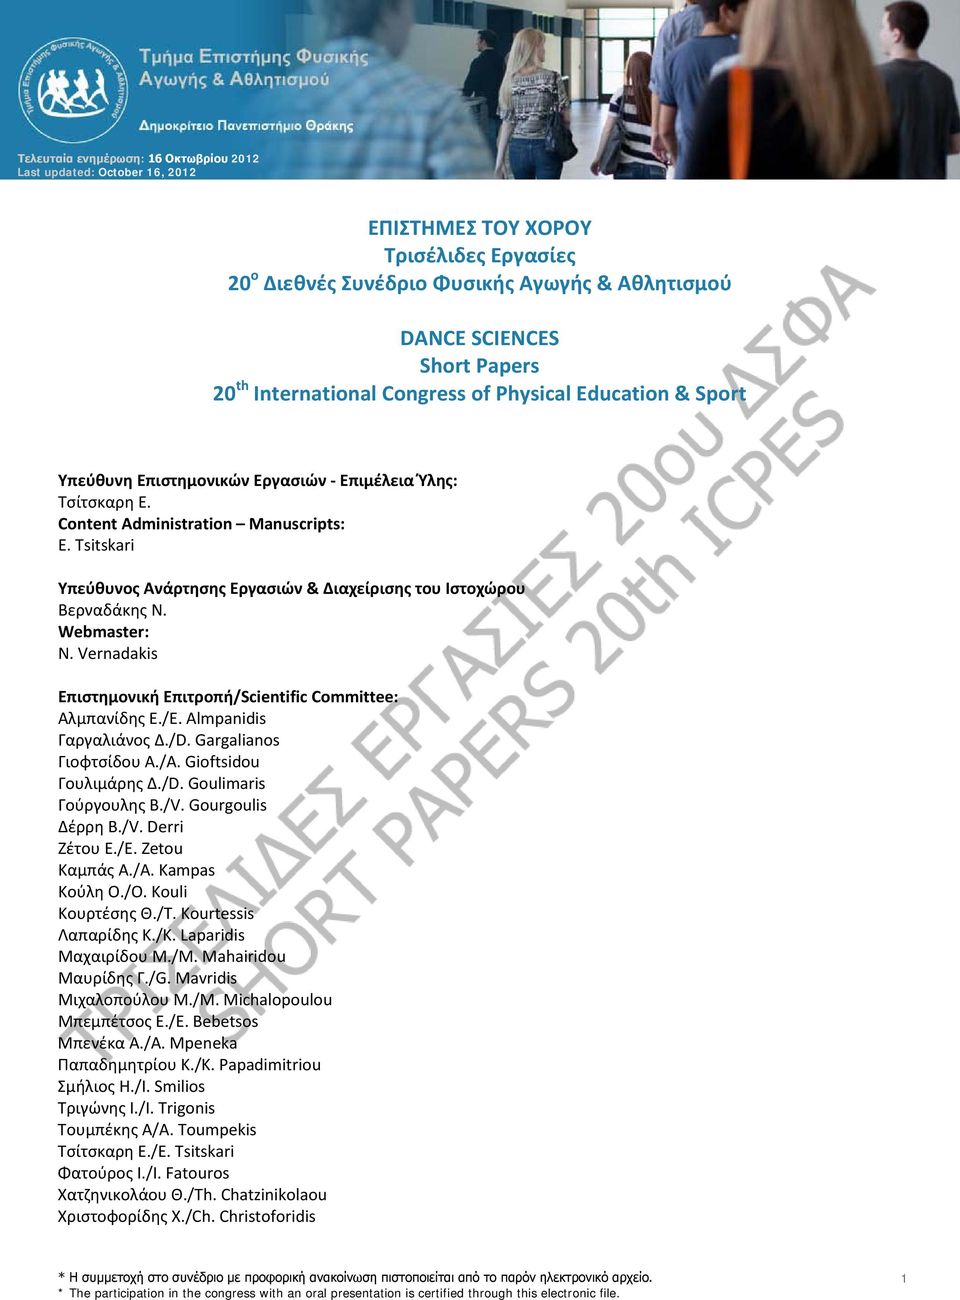 Tsitskari Υπεύθυνος Ανάρτησης Εργασιών & Διαχείρισης του Ιστοχώρου Βερναδάκης Ν. Webmaster: N. Vernadakis Επιστημονική Επιτροπή/Scientific Committee: Αλμπανίδης Ε./E. Almpanidis Γαργαλιάνος Δ./D.